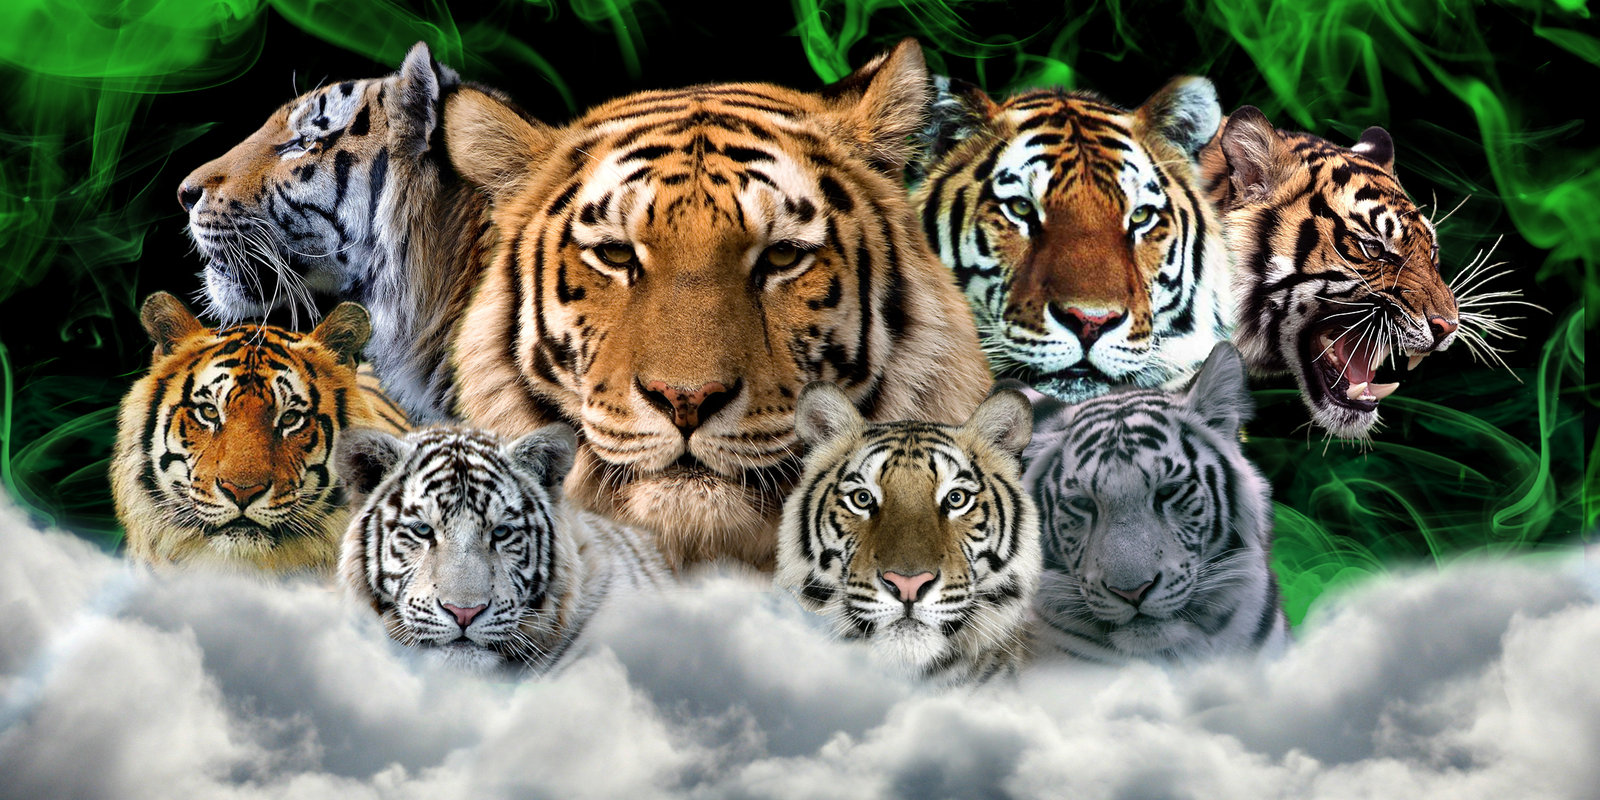 Tiger Wallpaper For Desktop